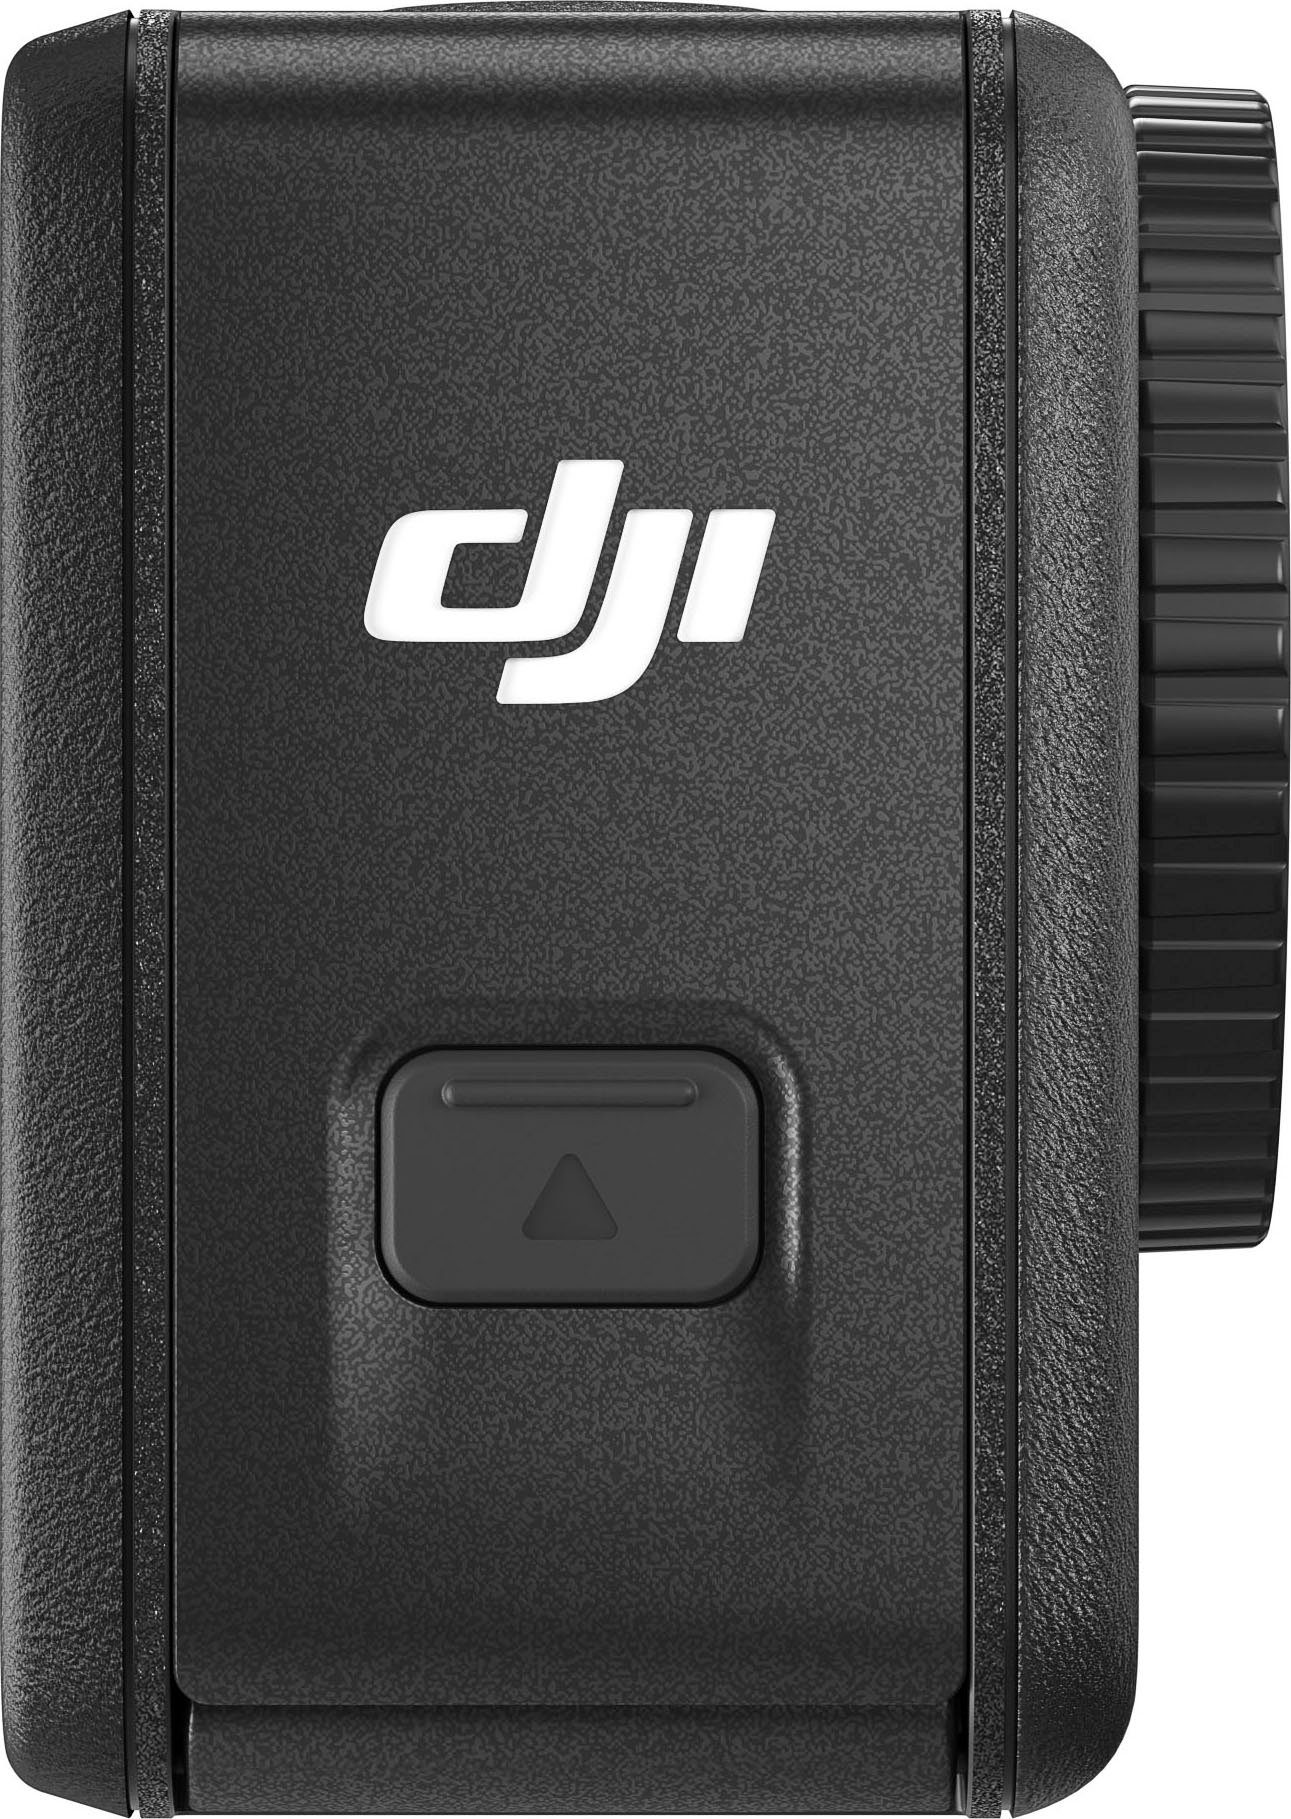 Action Standard Ultra DJI Combo Bluetooth, 4 (Wi-Fi) HD, WLAN Camcorder (4K Osmo